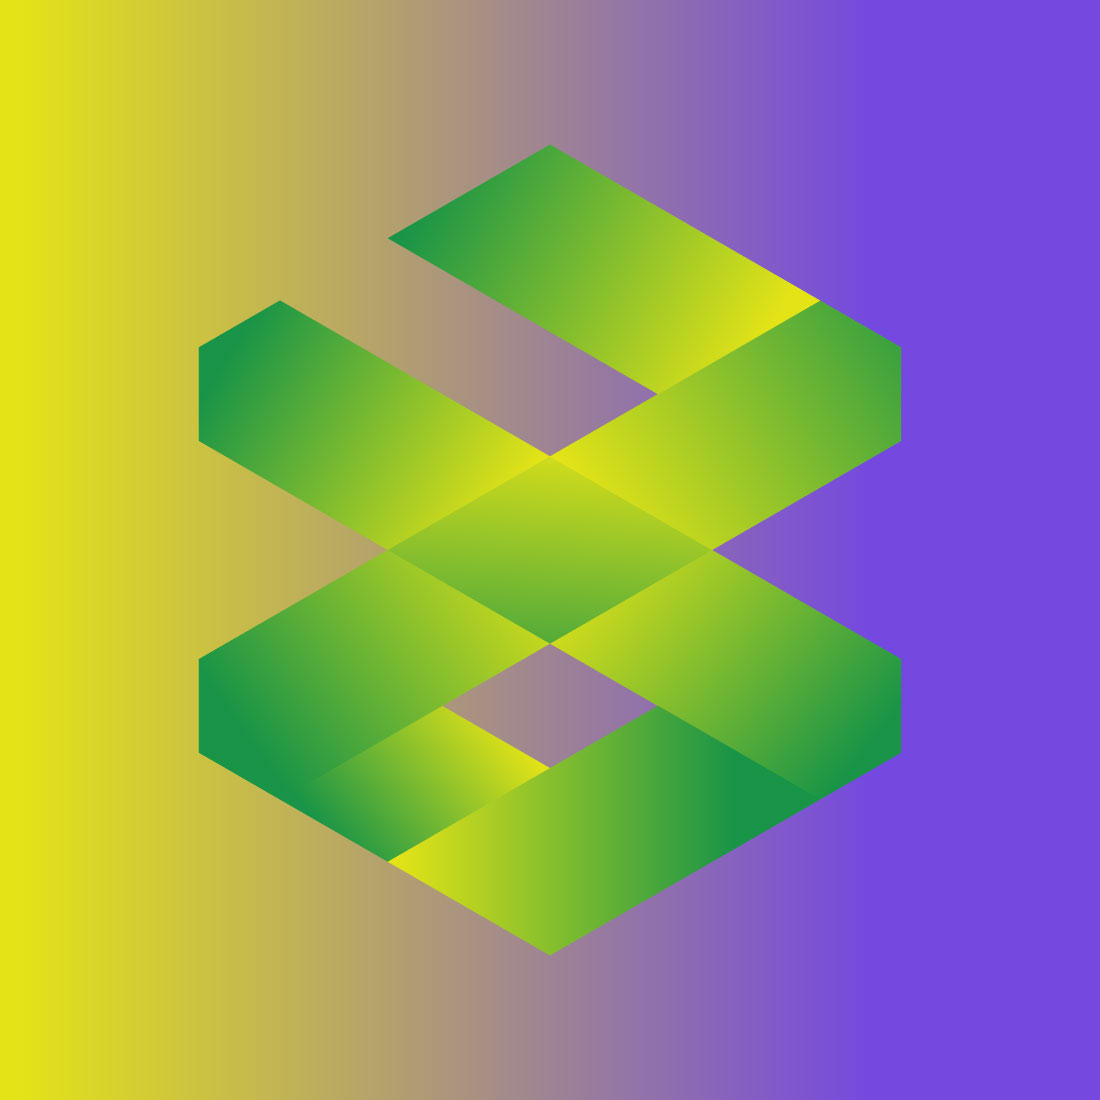 Beauty Polygon Logo cover image.